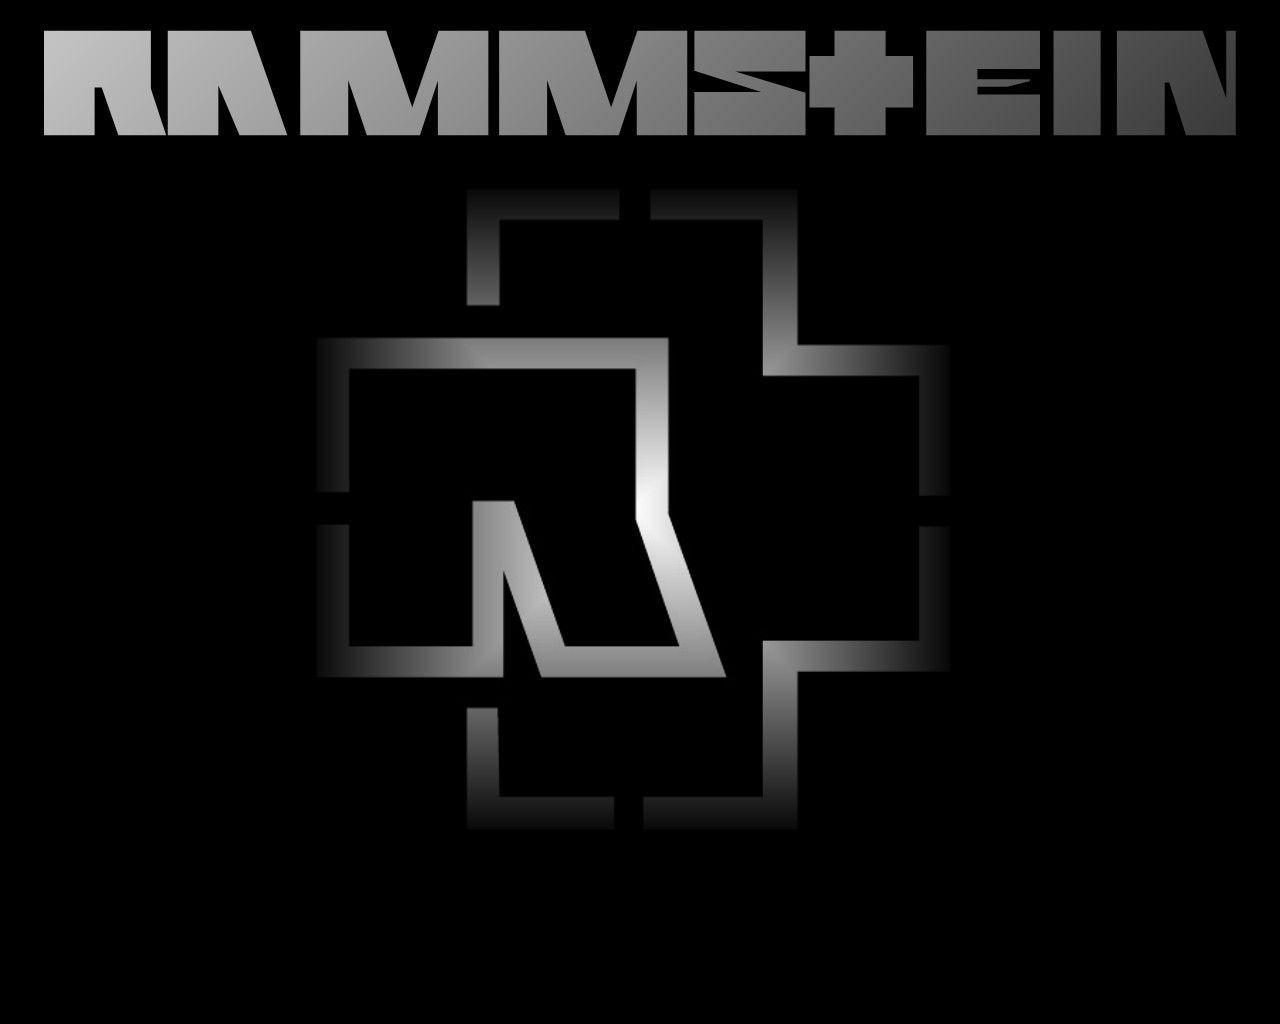 HD Rammstein Image, Download Free